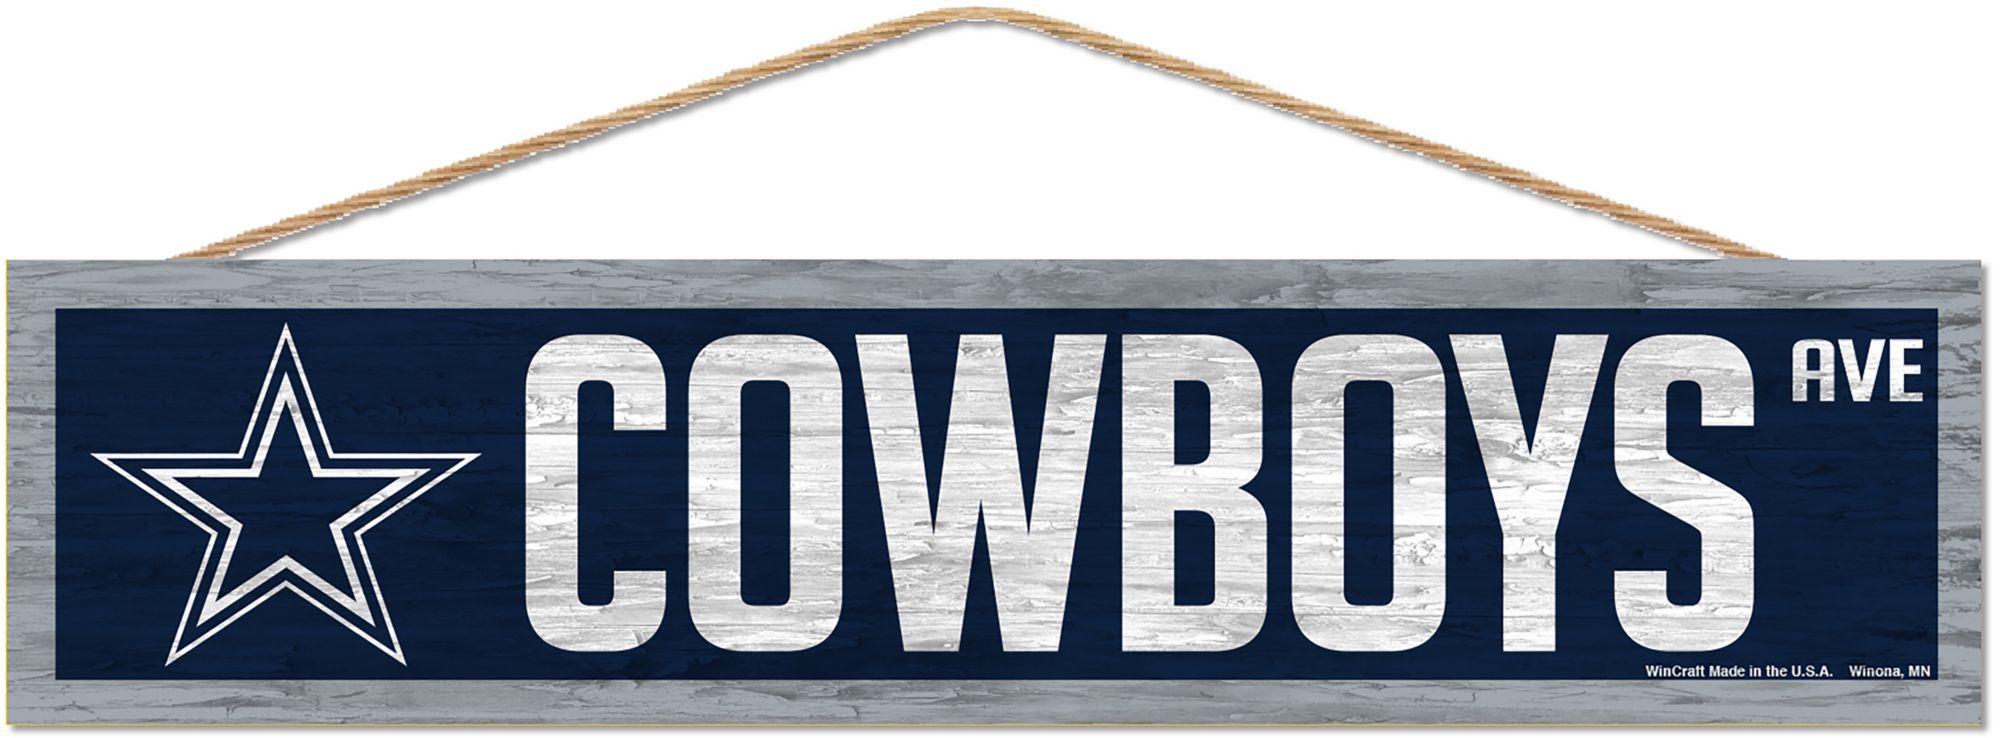 NFL® Dallas Cowboys All Over Tervis Tumbler